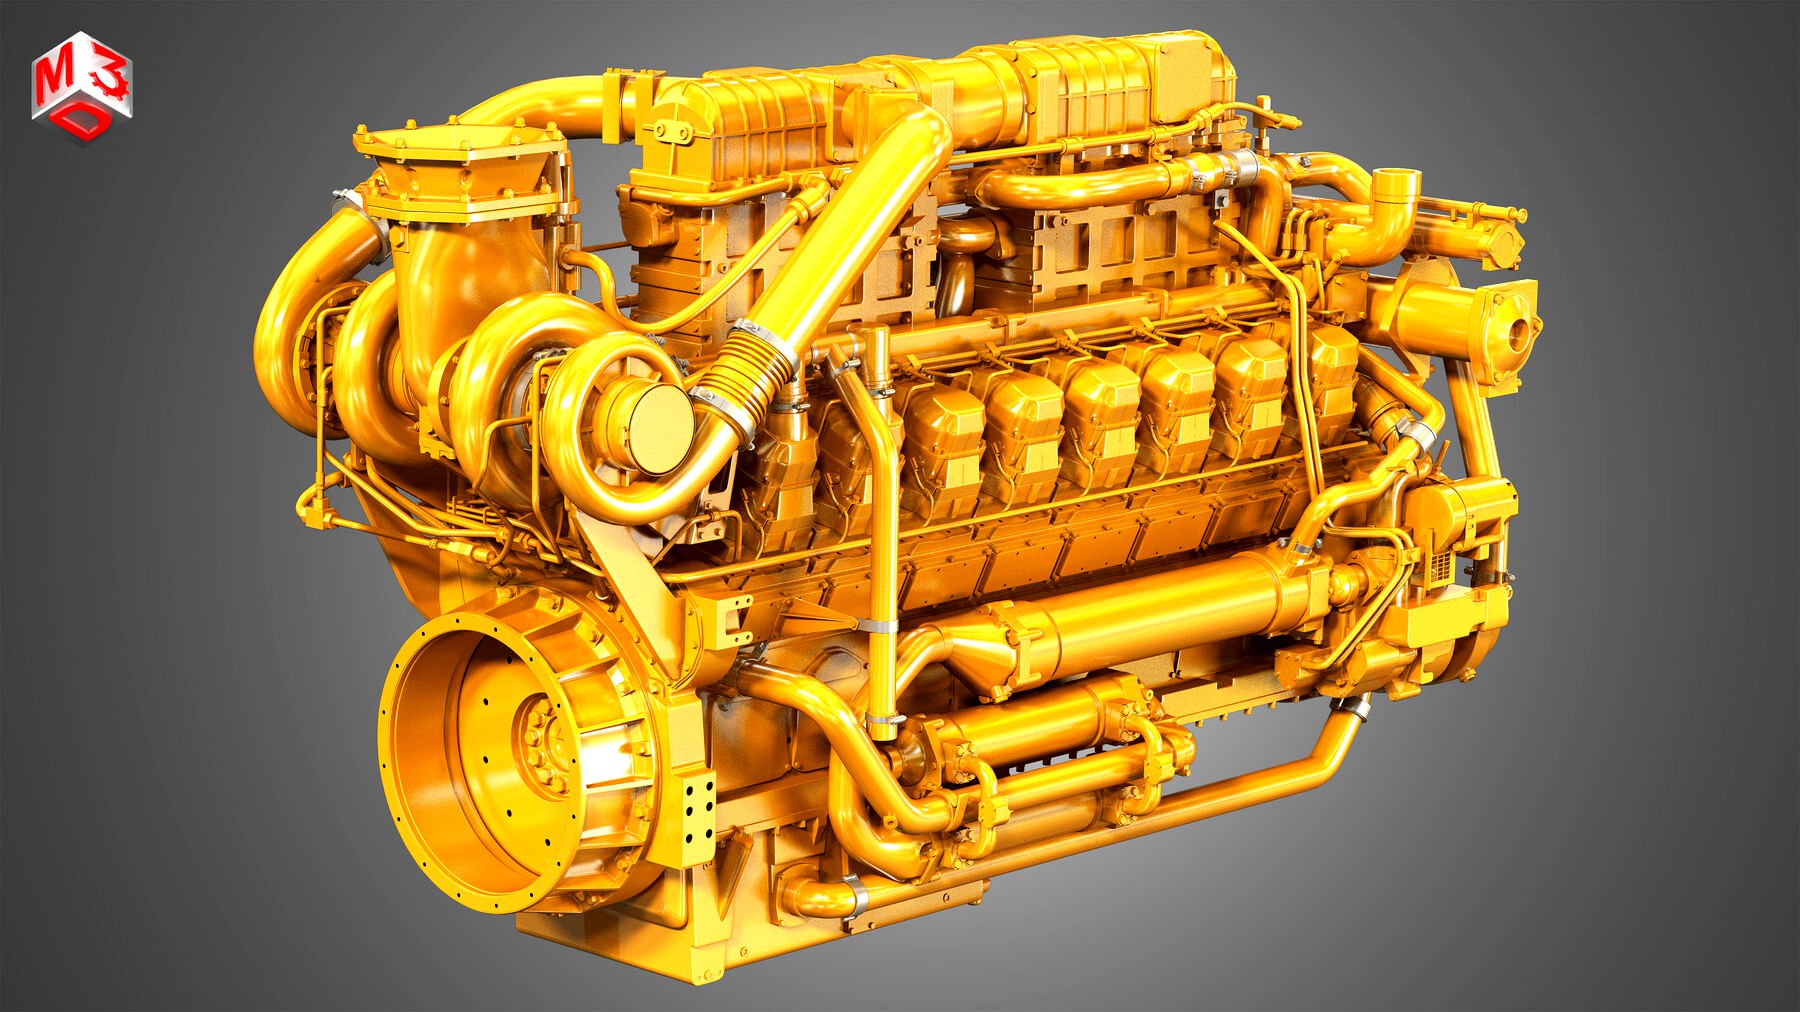 3516C HD Engine - V16 Industrial Diesel Engine